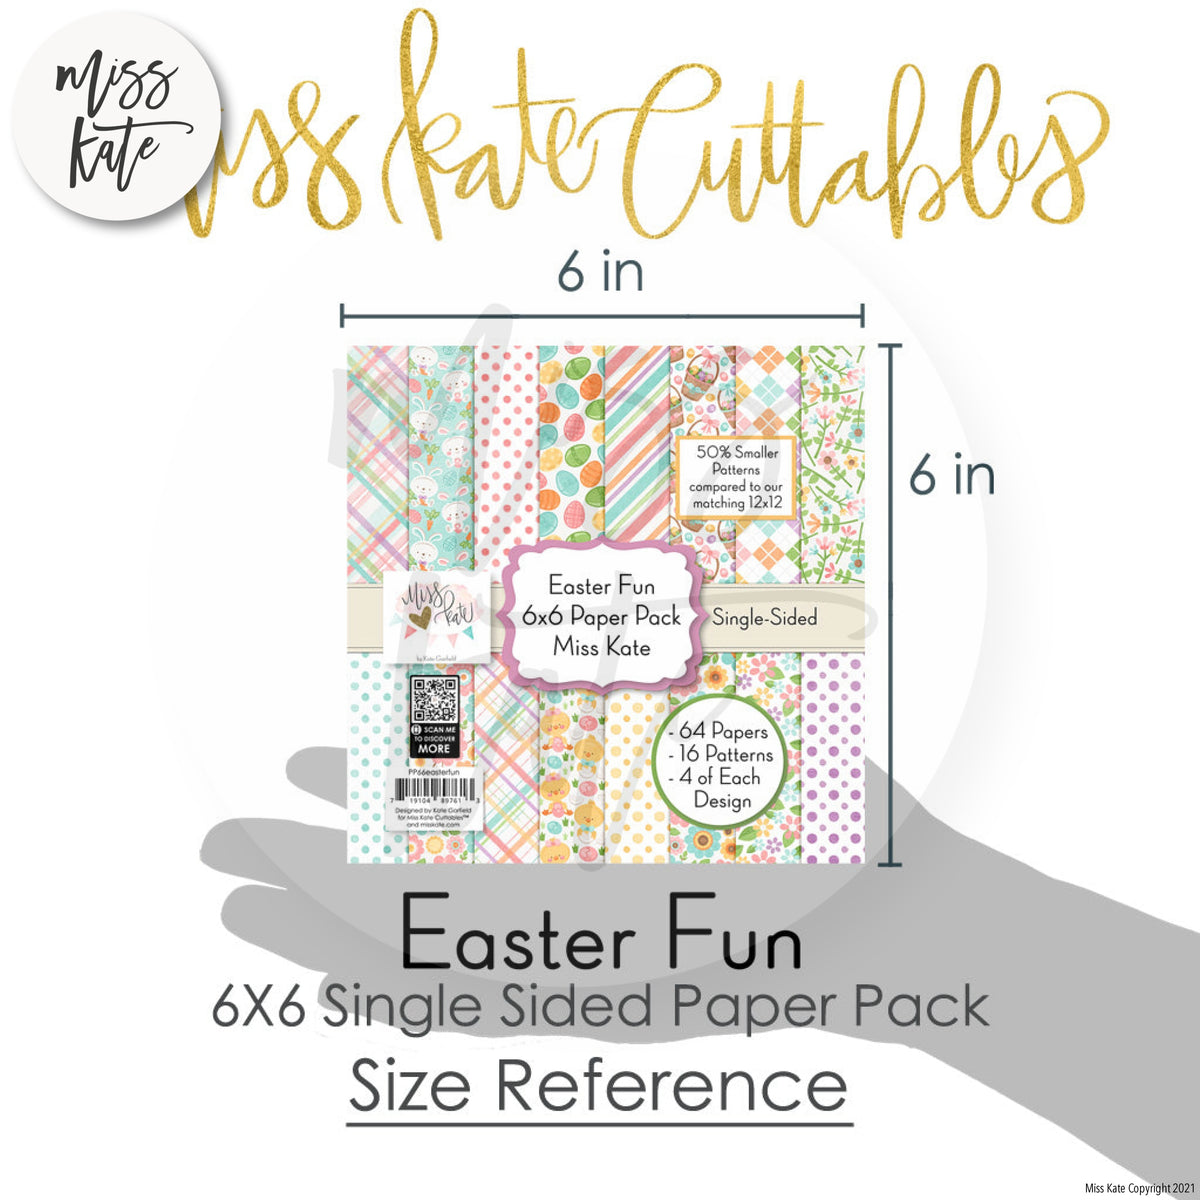 Baby Girl - 6x6 Paper Pack Scrapbook Paper Pack – MISS KATE